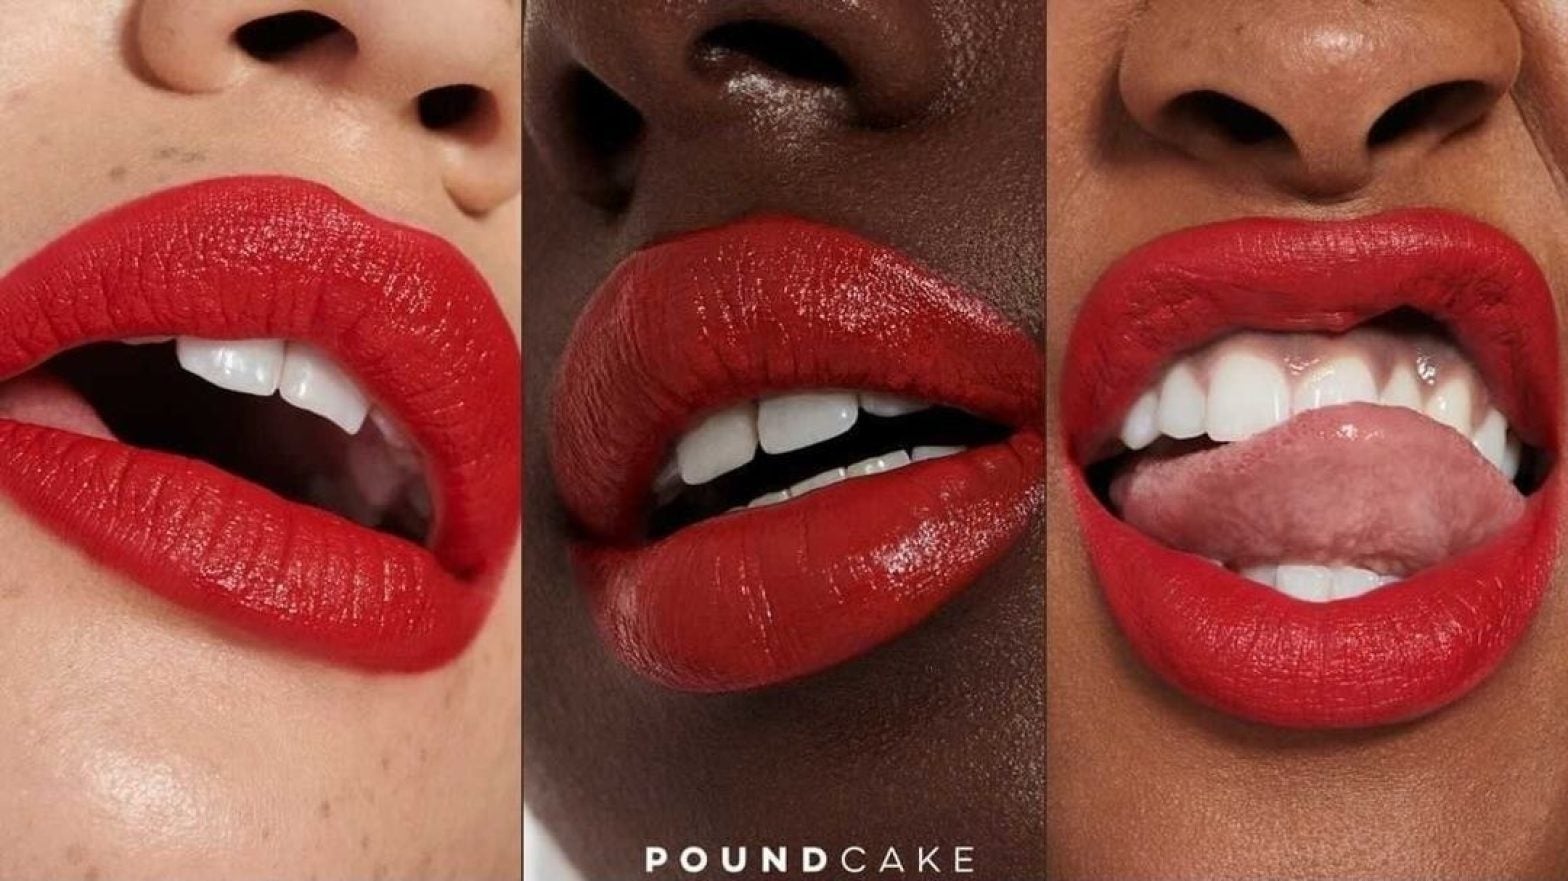 Pucker Up! Pound Cake Cosmetics Designs Innovative Red Lipsticks For Black Women